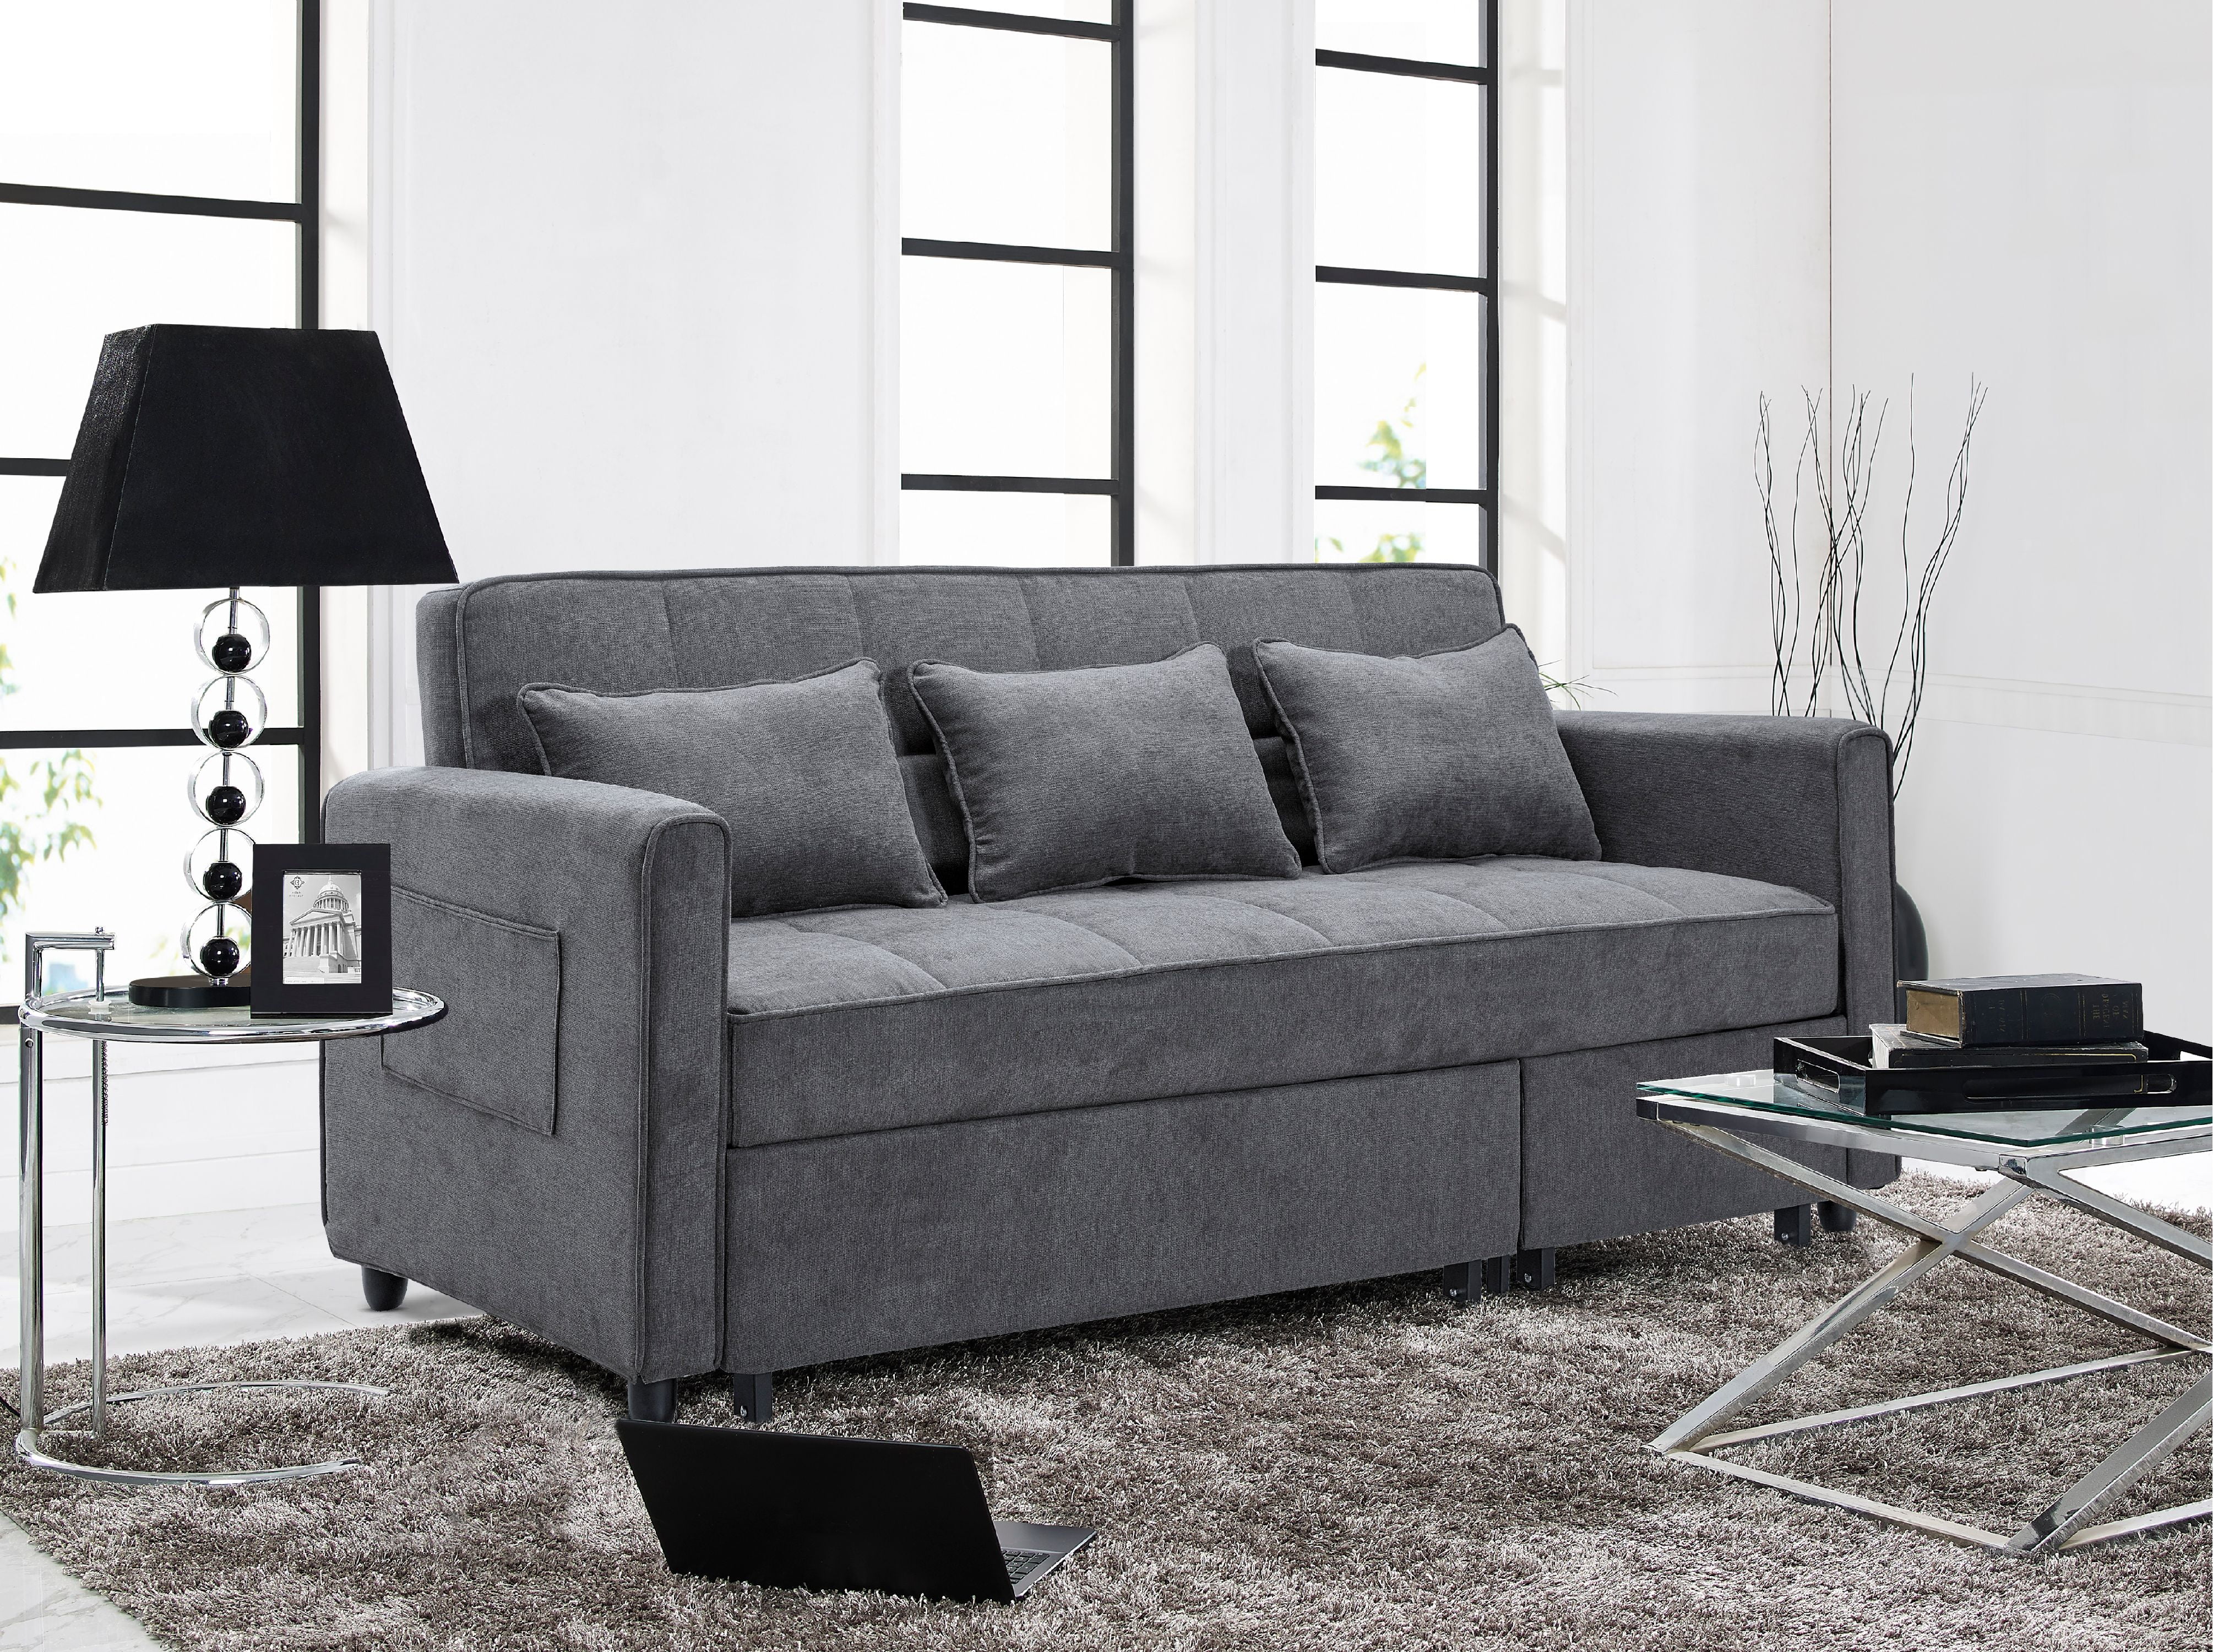 relax-a-lounger hinton king sofa bed gray